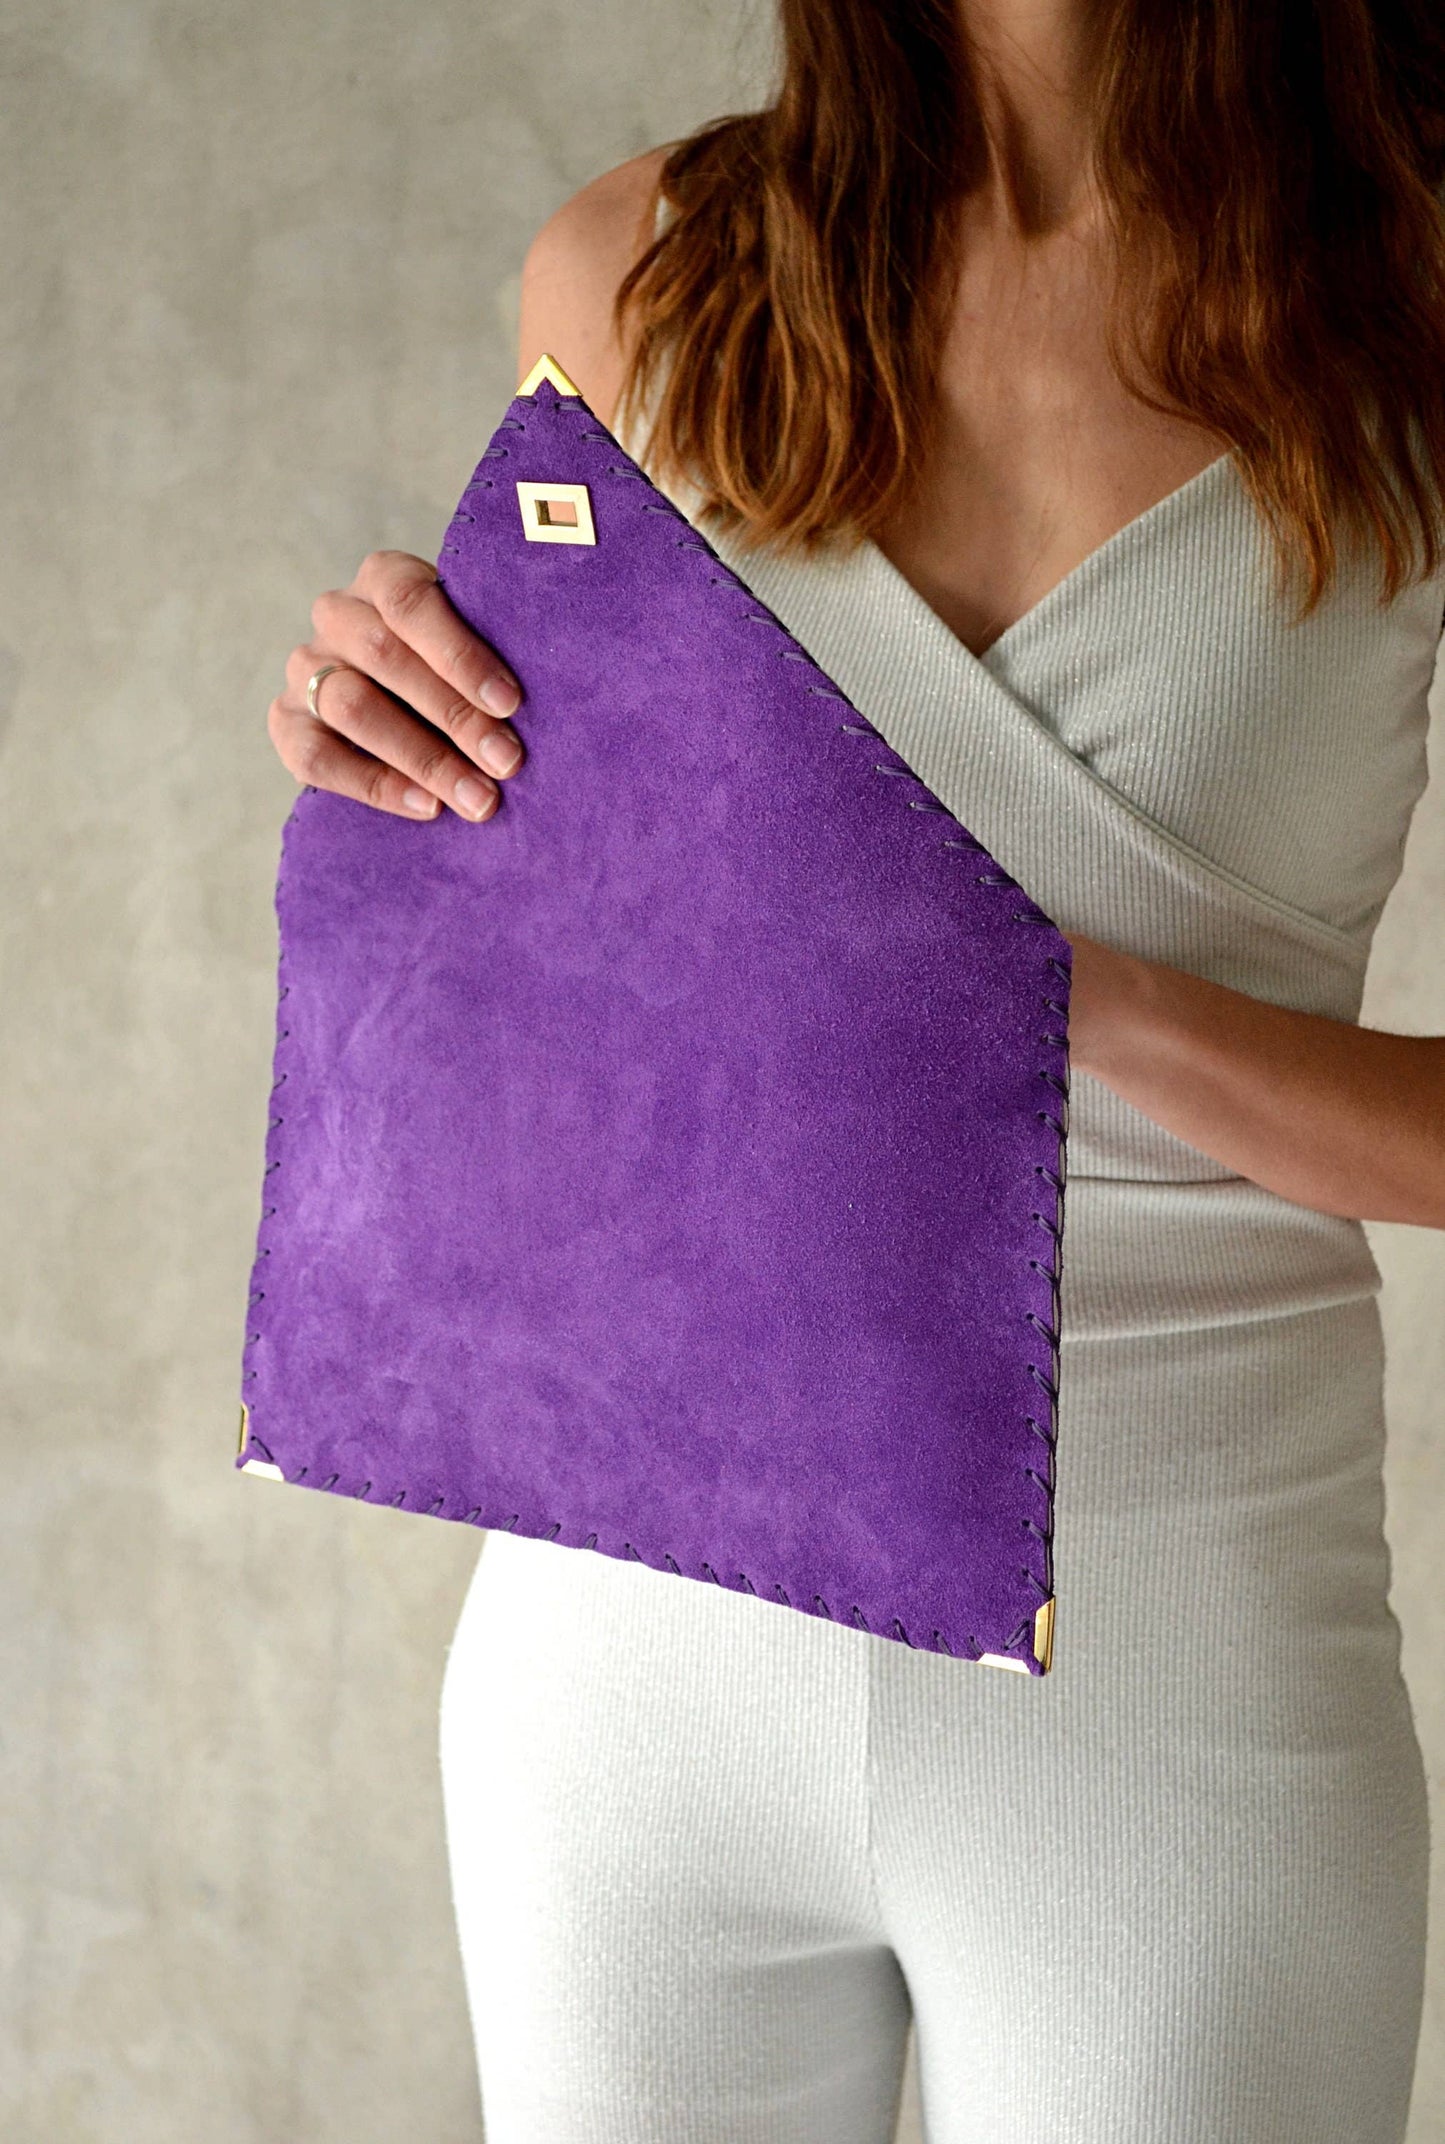 ANA KOUTSI - Symmetria soft clutch in purple: Gold / Large